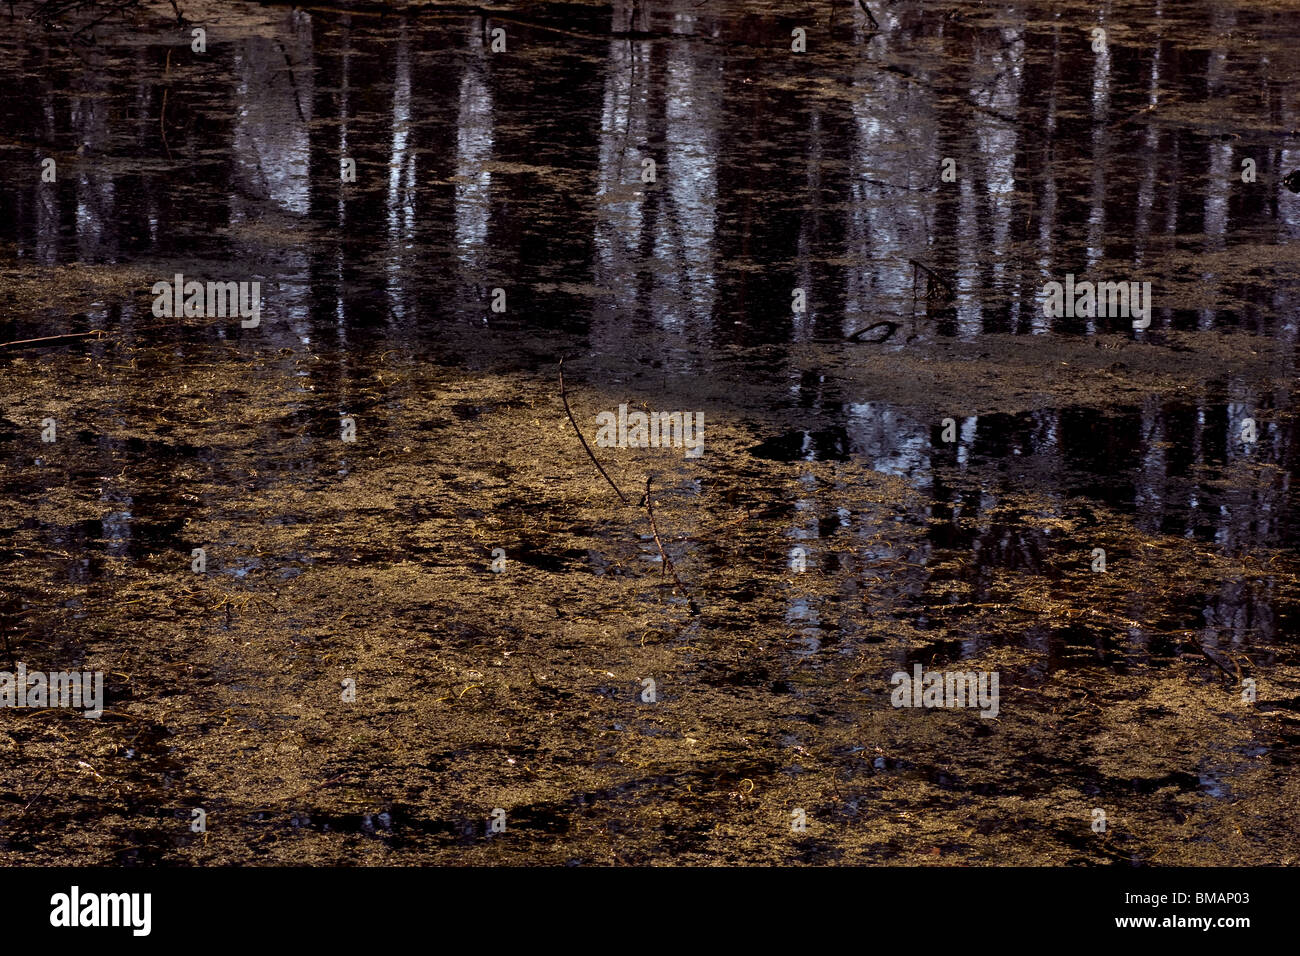 Forest lake with duckweed reflecting surrounding trees Stock Photo